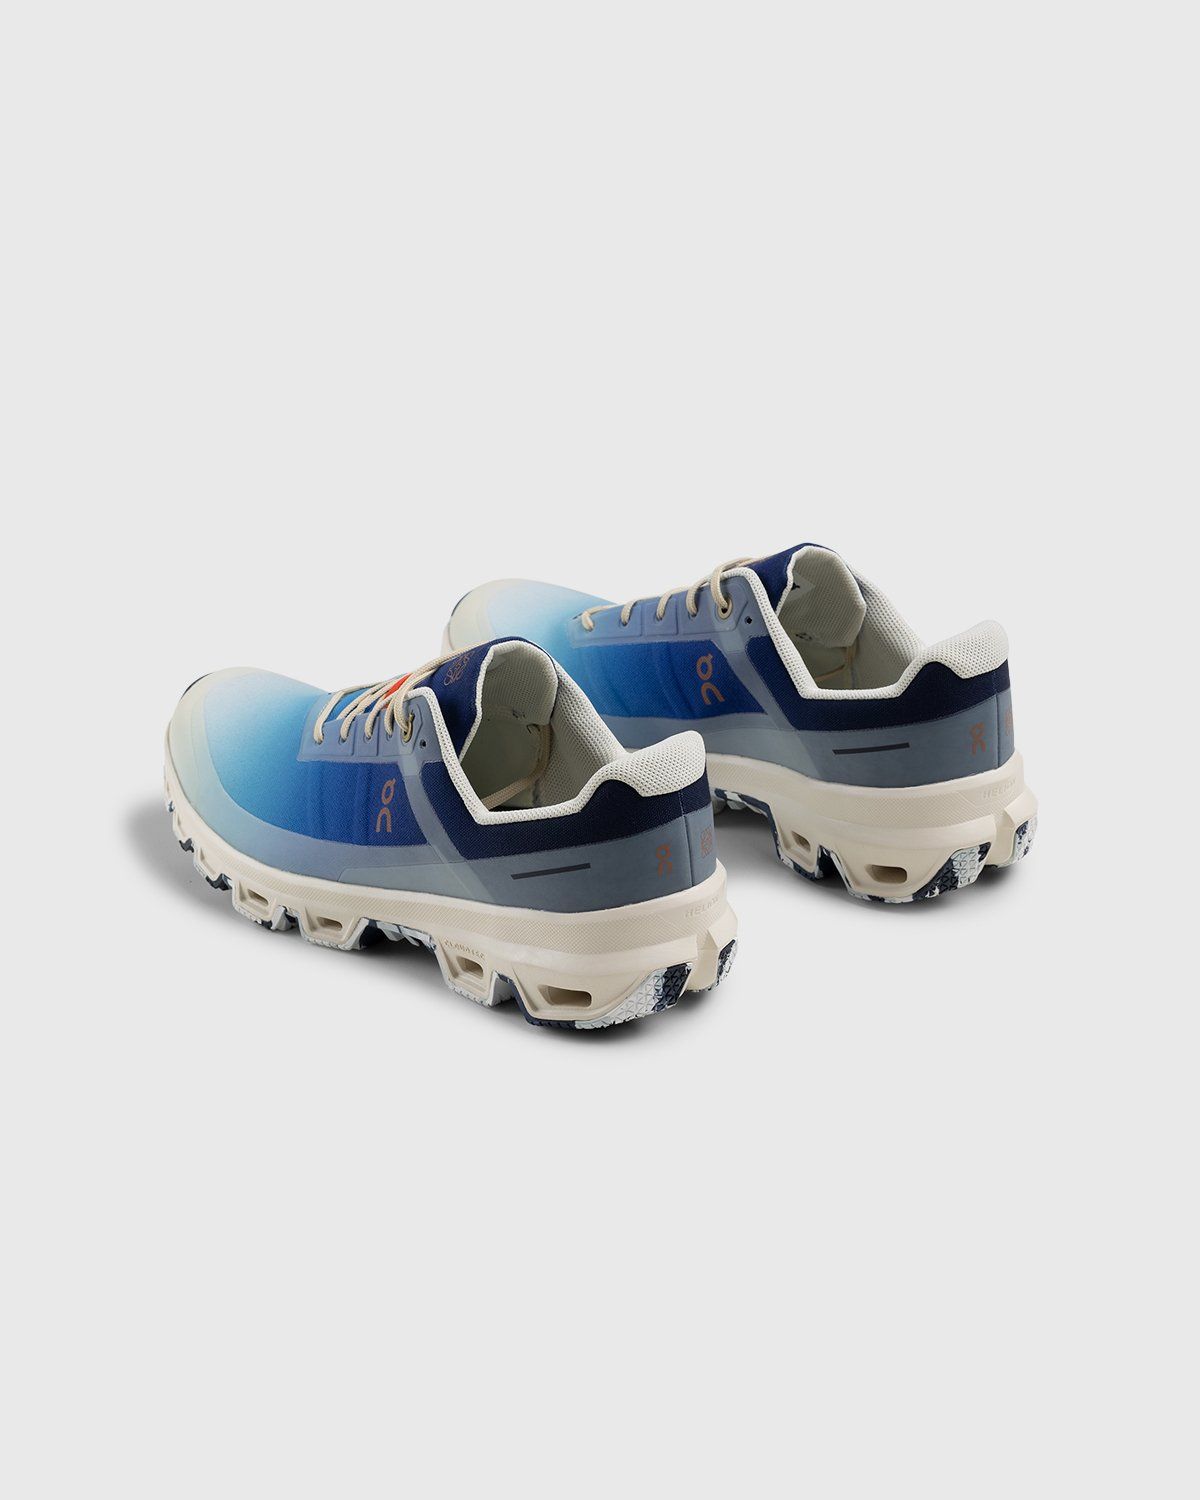 Loewe x On – Women's Cloudventure Gradient Blue - Low Top Sneakers - Blue - Image 4